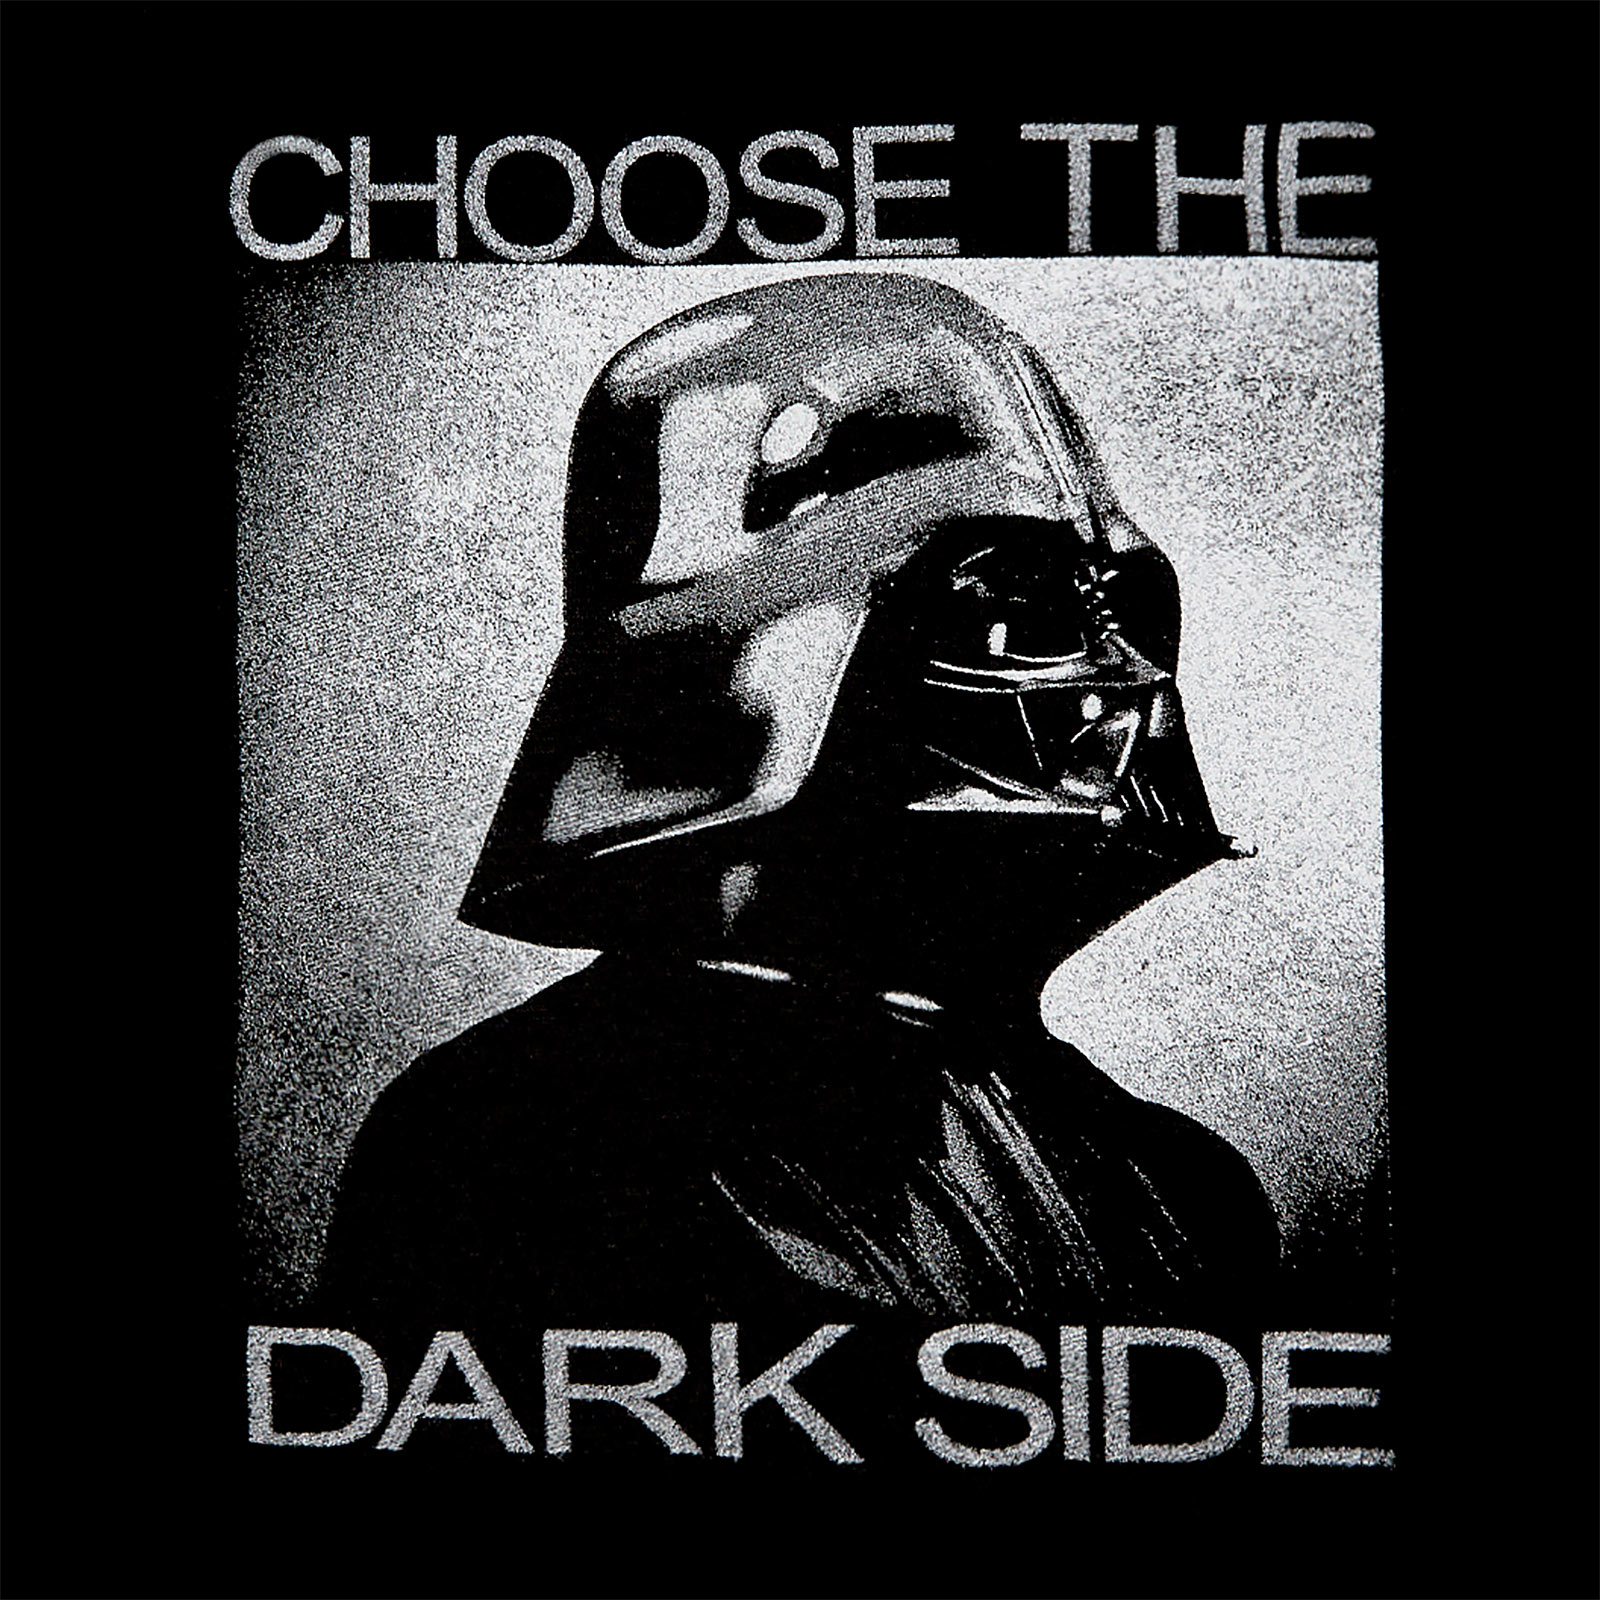 Star Wars - Darth Vader Kies de Dark Side Hoodie zwart